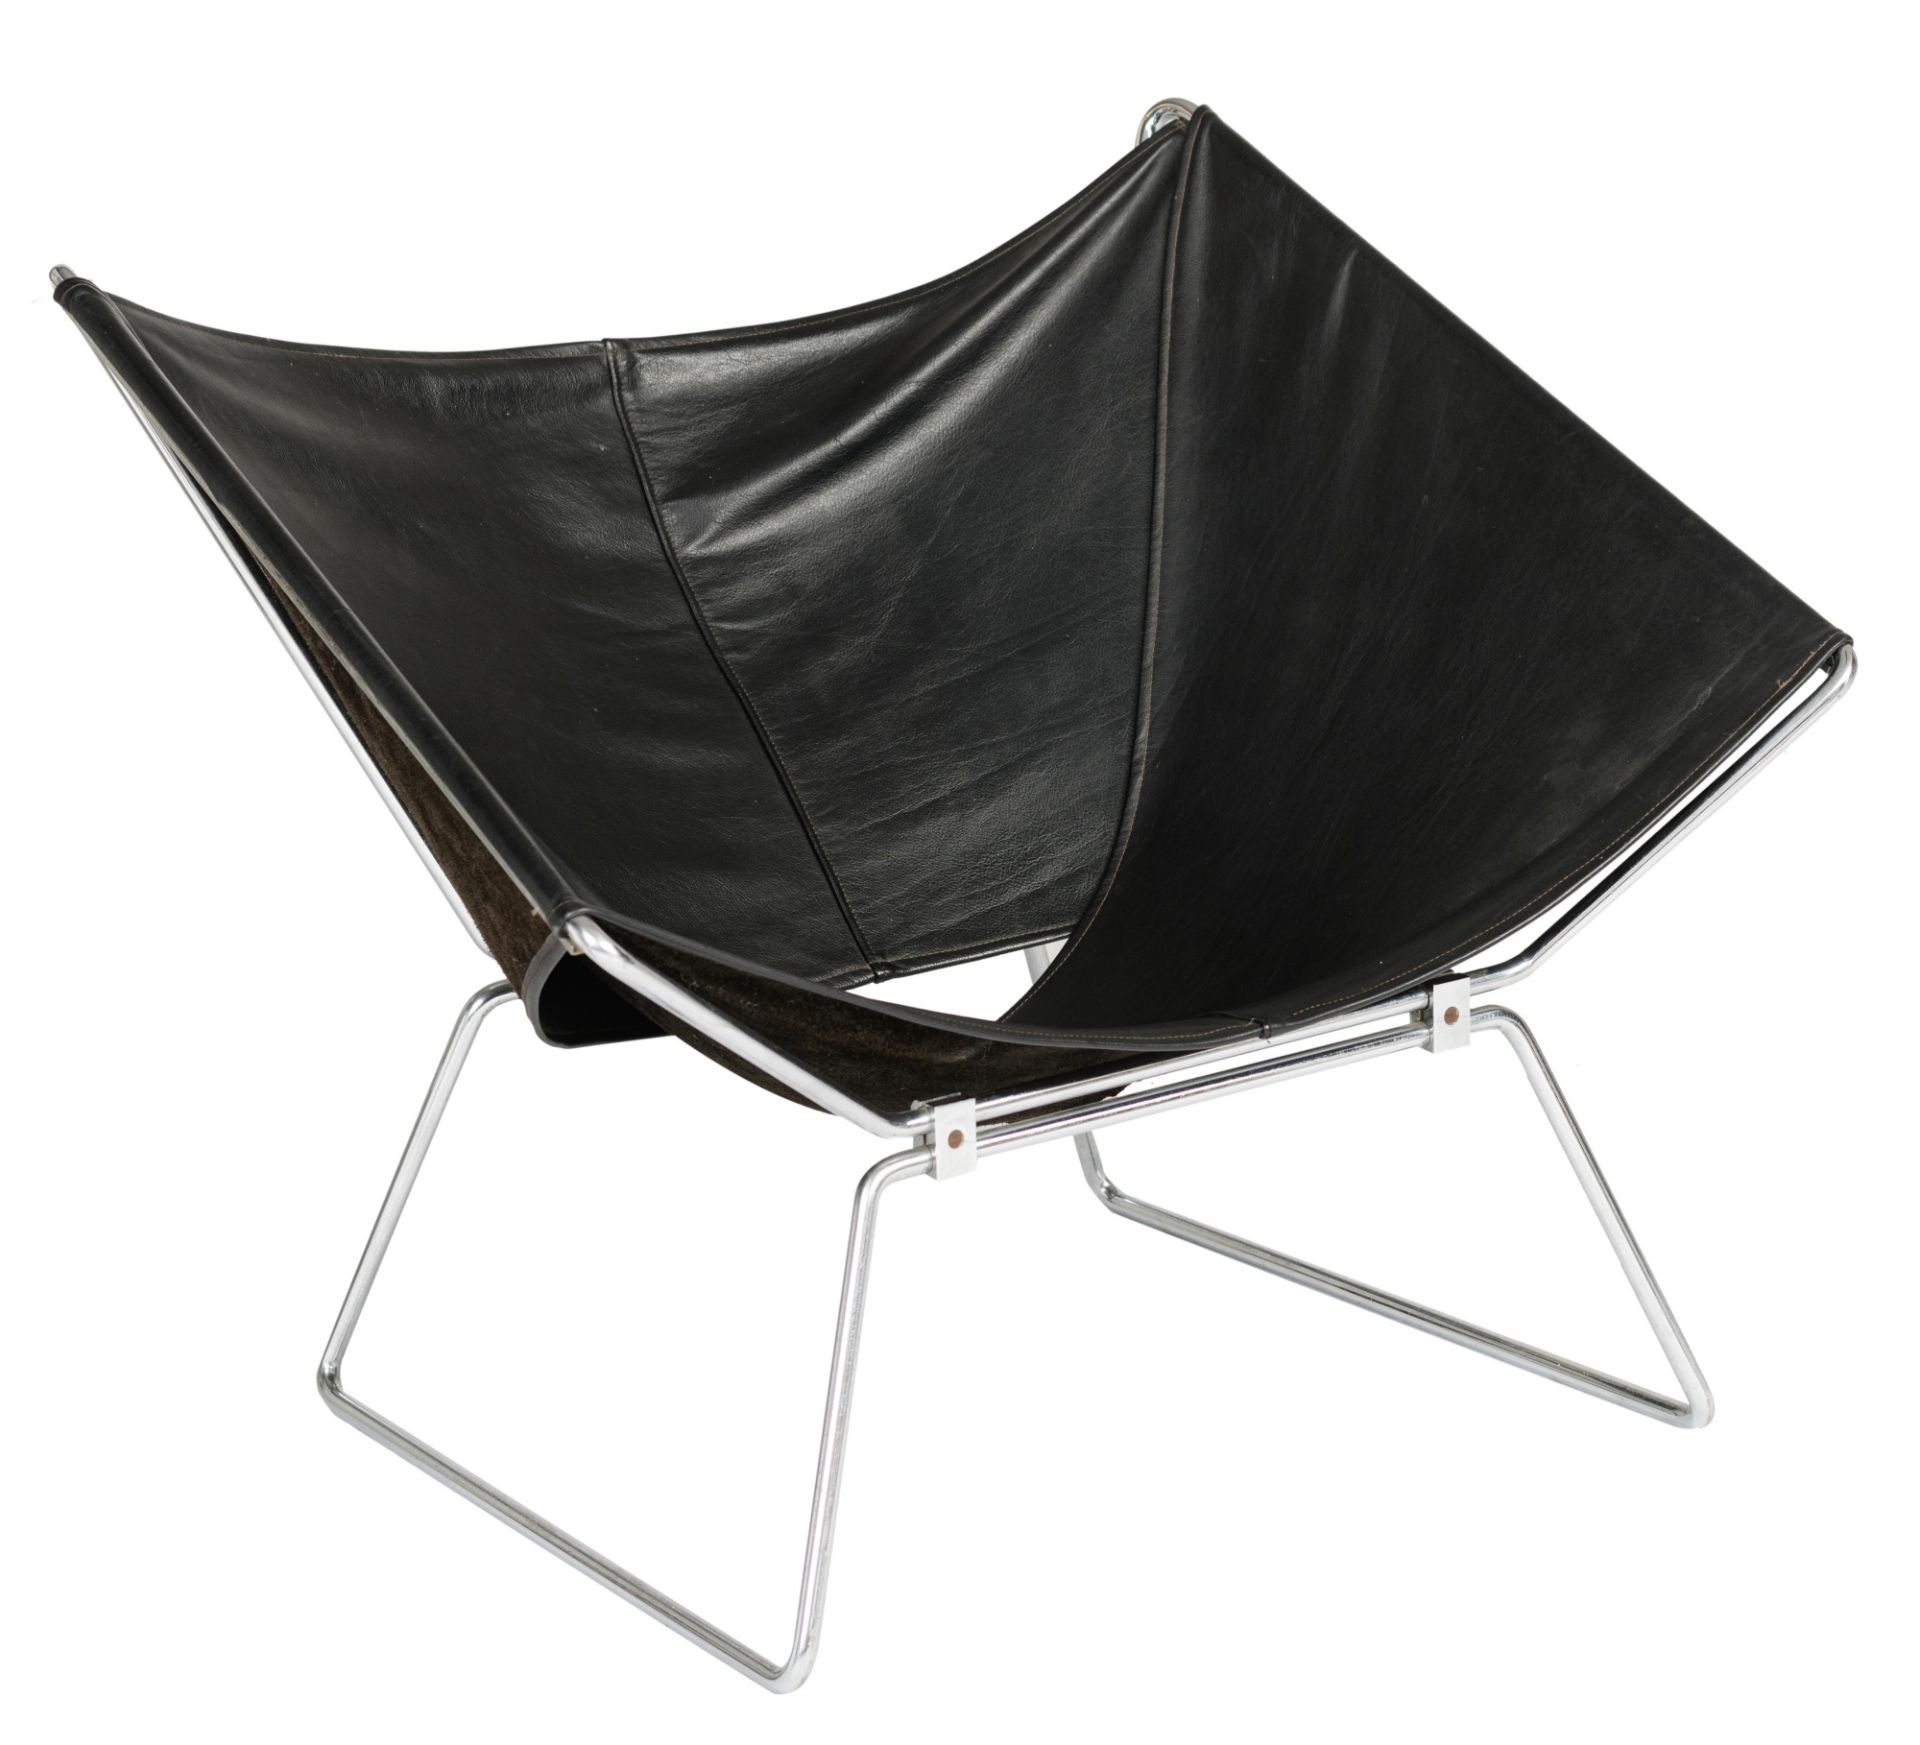 An AP-14 'butterfly' chair by Pierre Paulin for Polak, 1954, H 68,5 - W 77 - D 72 cm